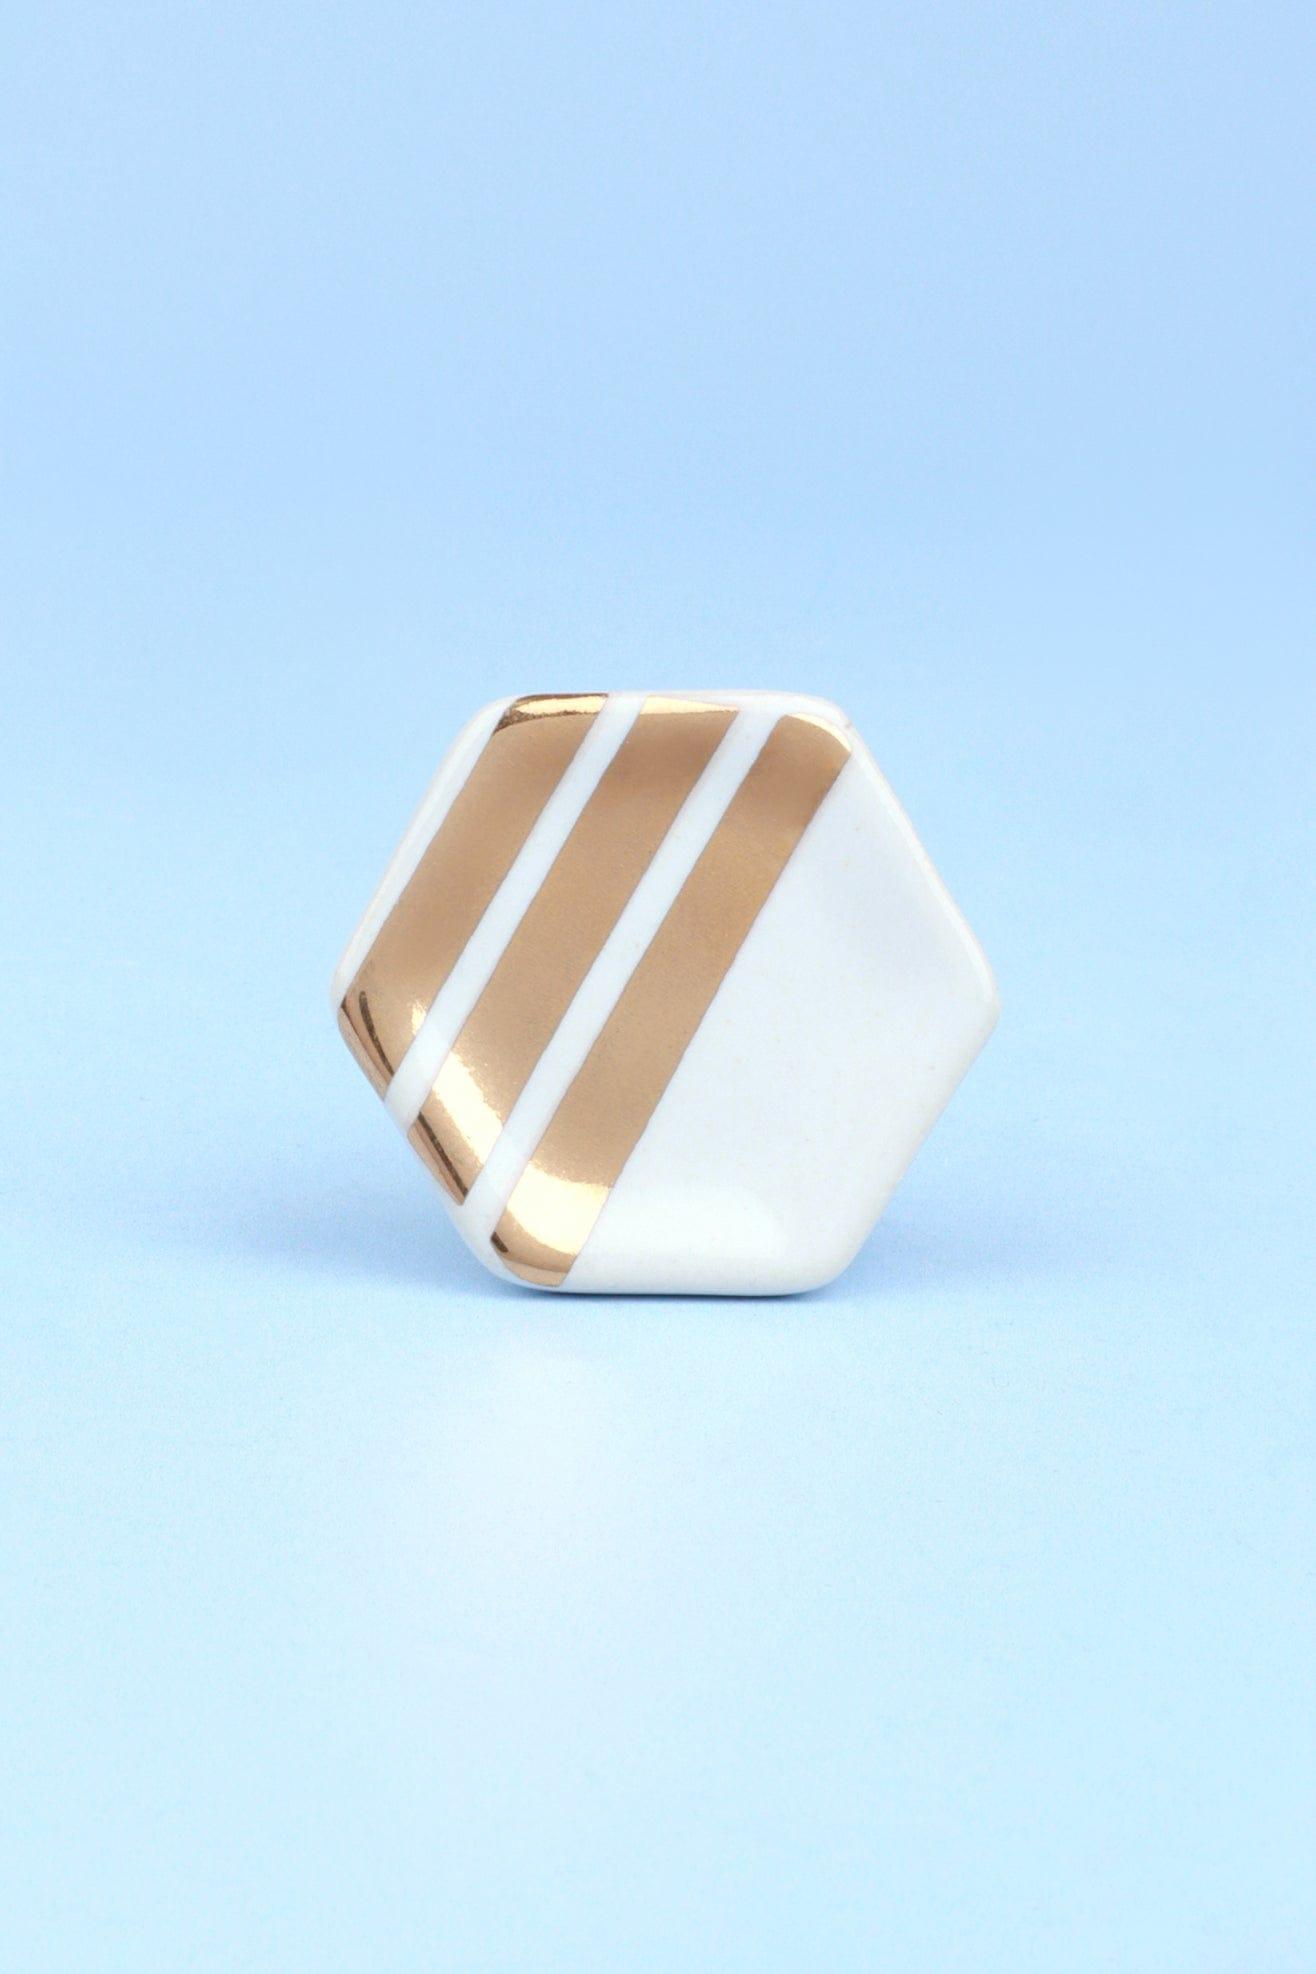 G Decor Cabinet Knobs & Handles Stripe Alma Hive Metallic Stripe Triangle Ceramic Door Knobs